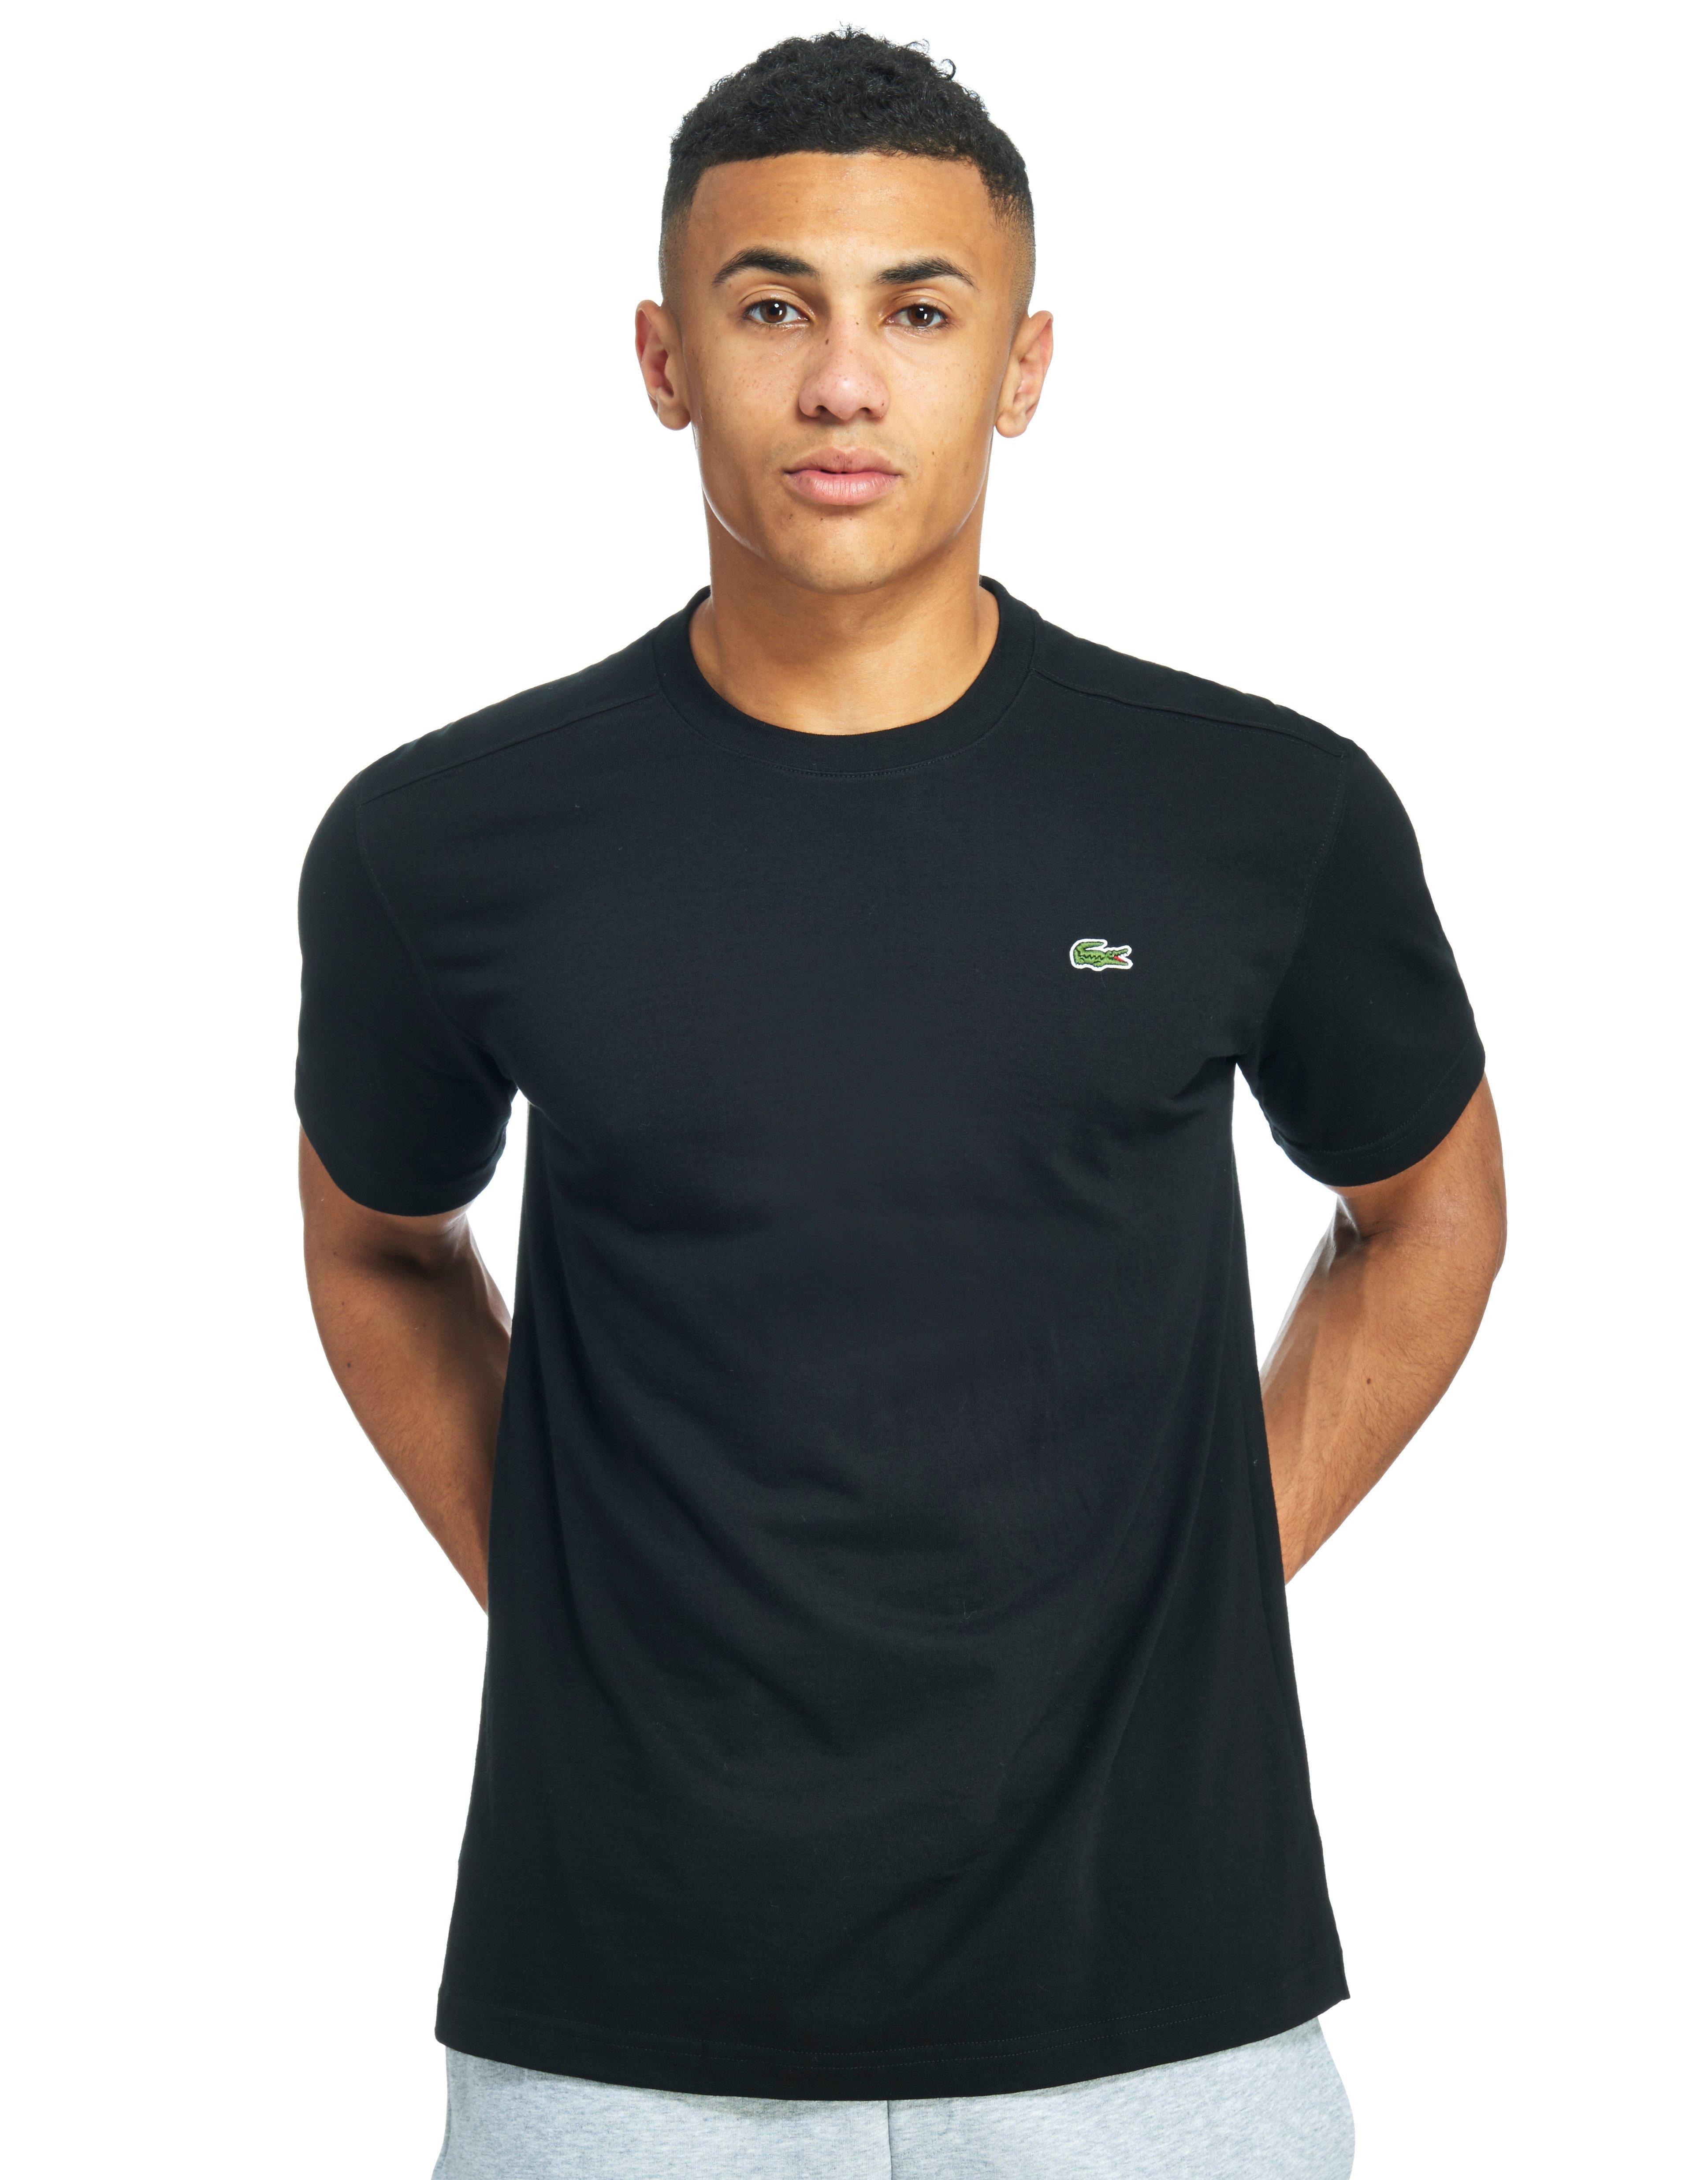 Lacoste Cotton Croc Logo Short Sleeve T-shirt in Black for Men - Lyst